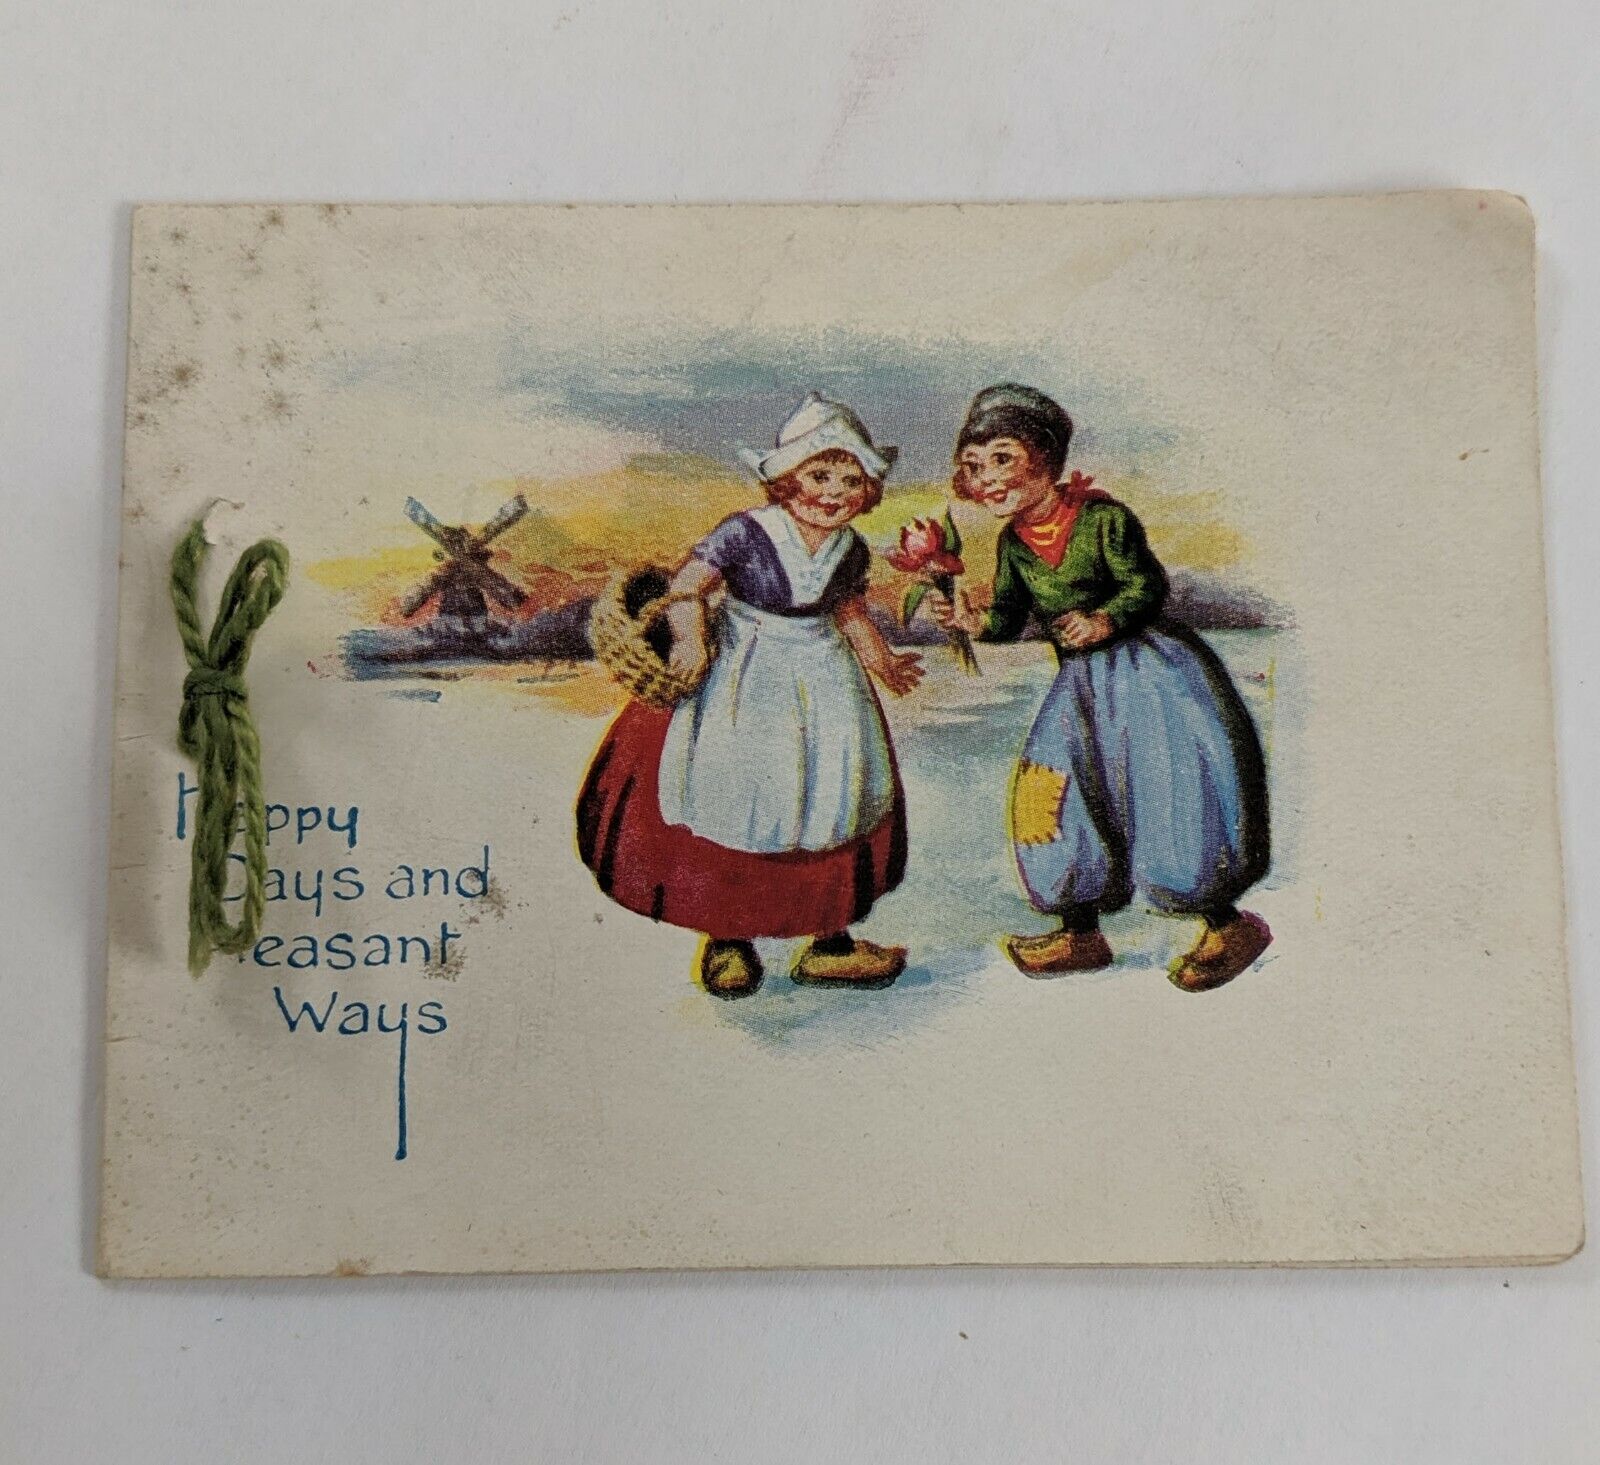 Vintage Early 20th Century Christmas Greeting Card Happy Days Pleasnt Ways 